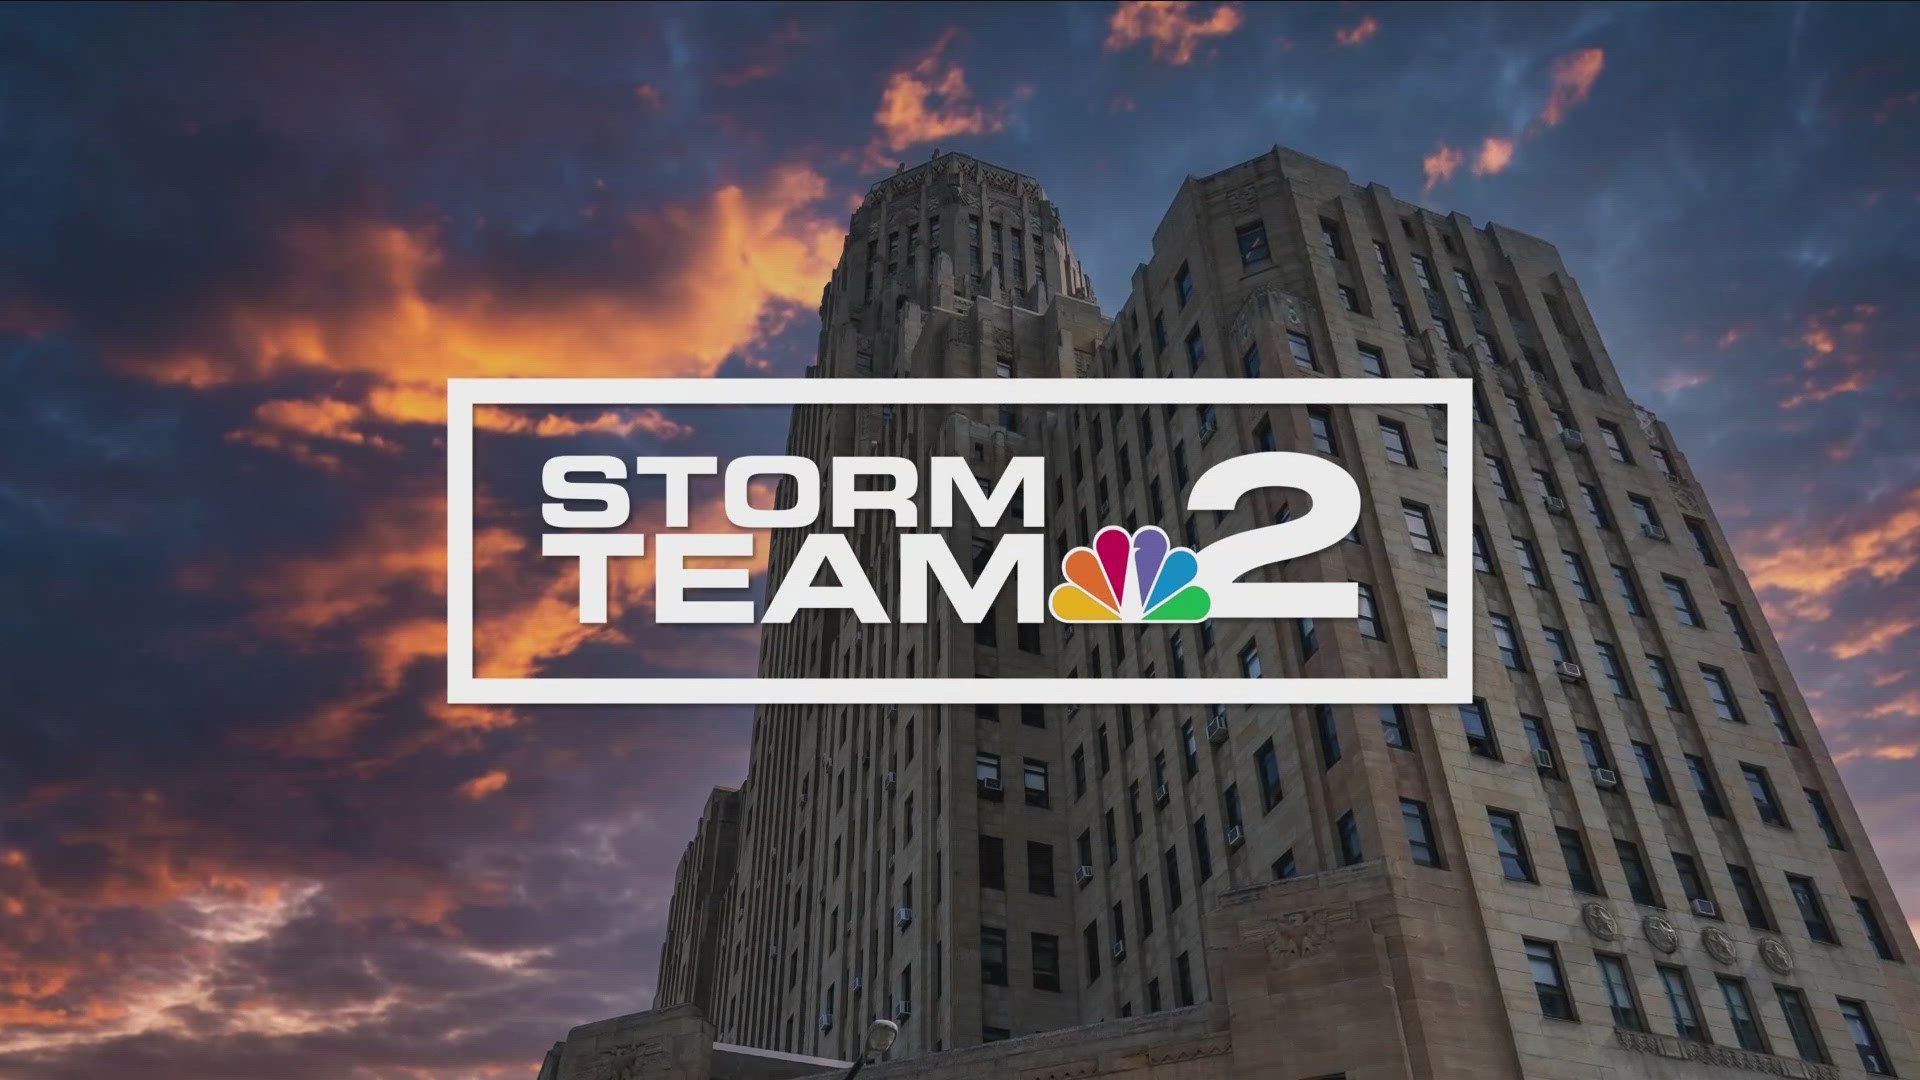 Storm Team 2 night forecast with James Gregorio for Thursday, June 27.